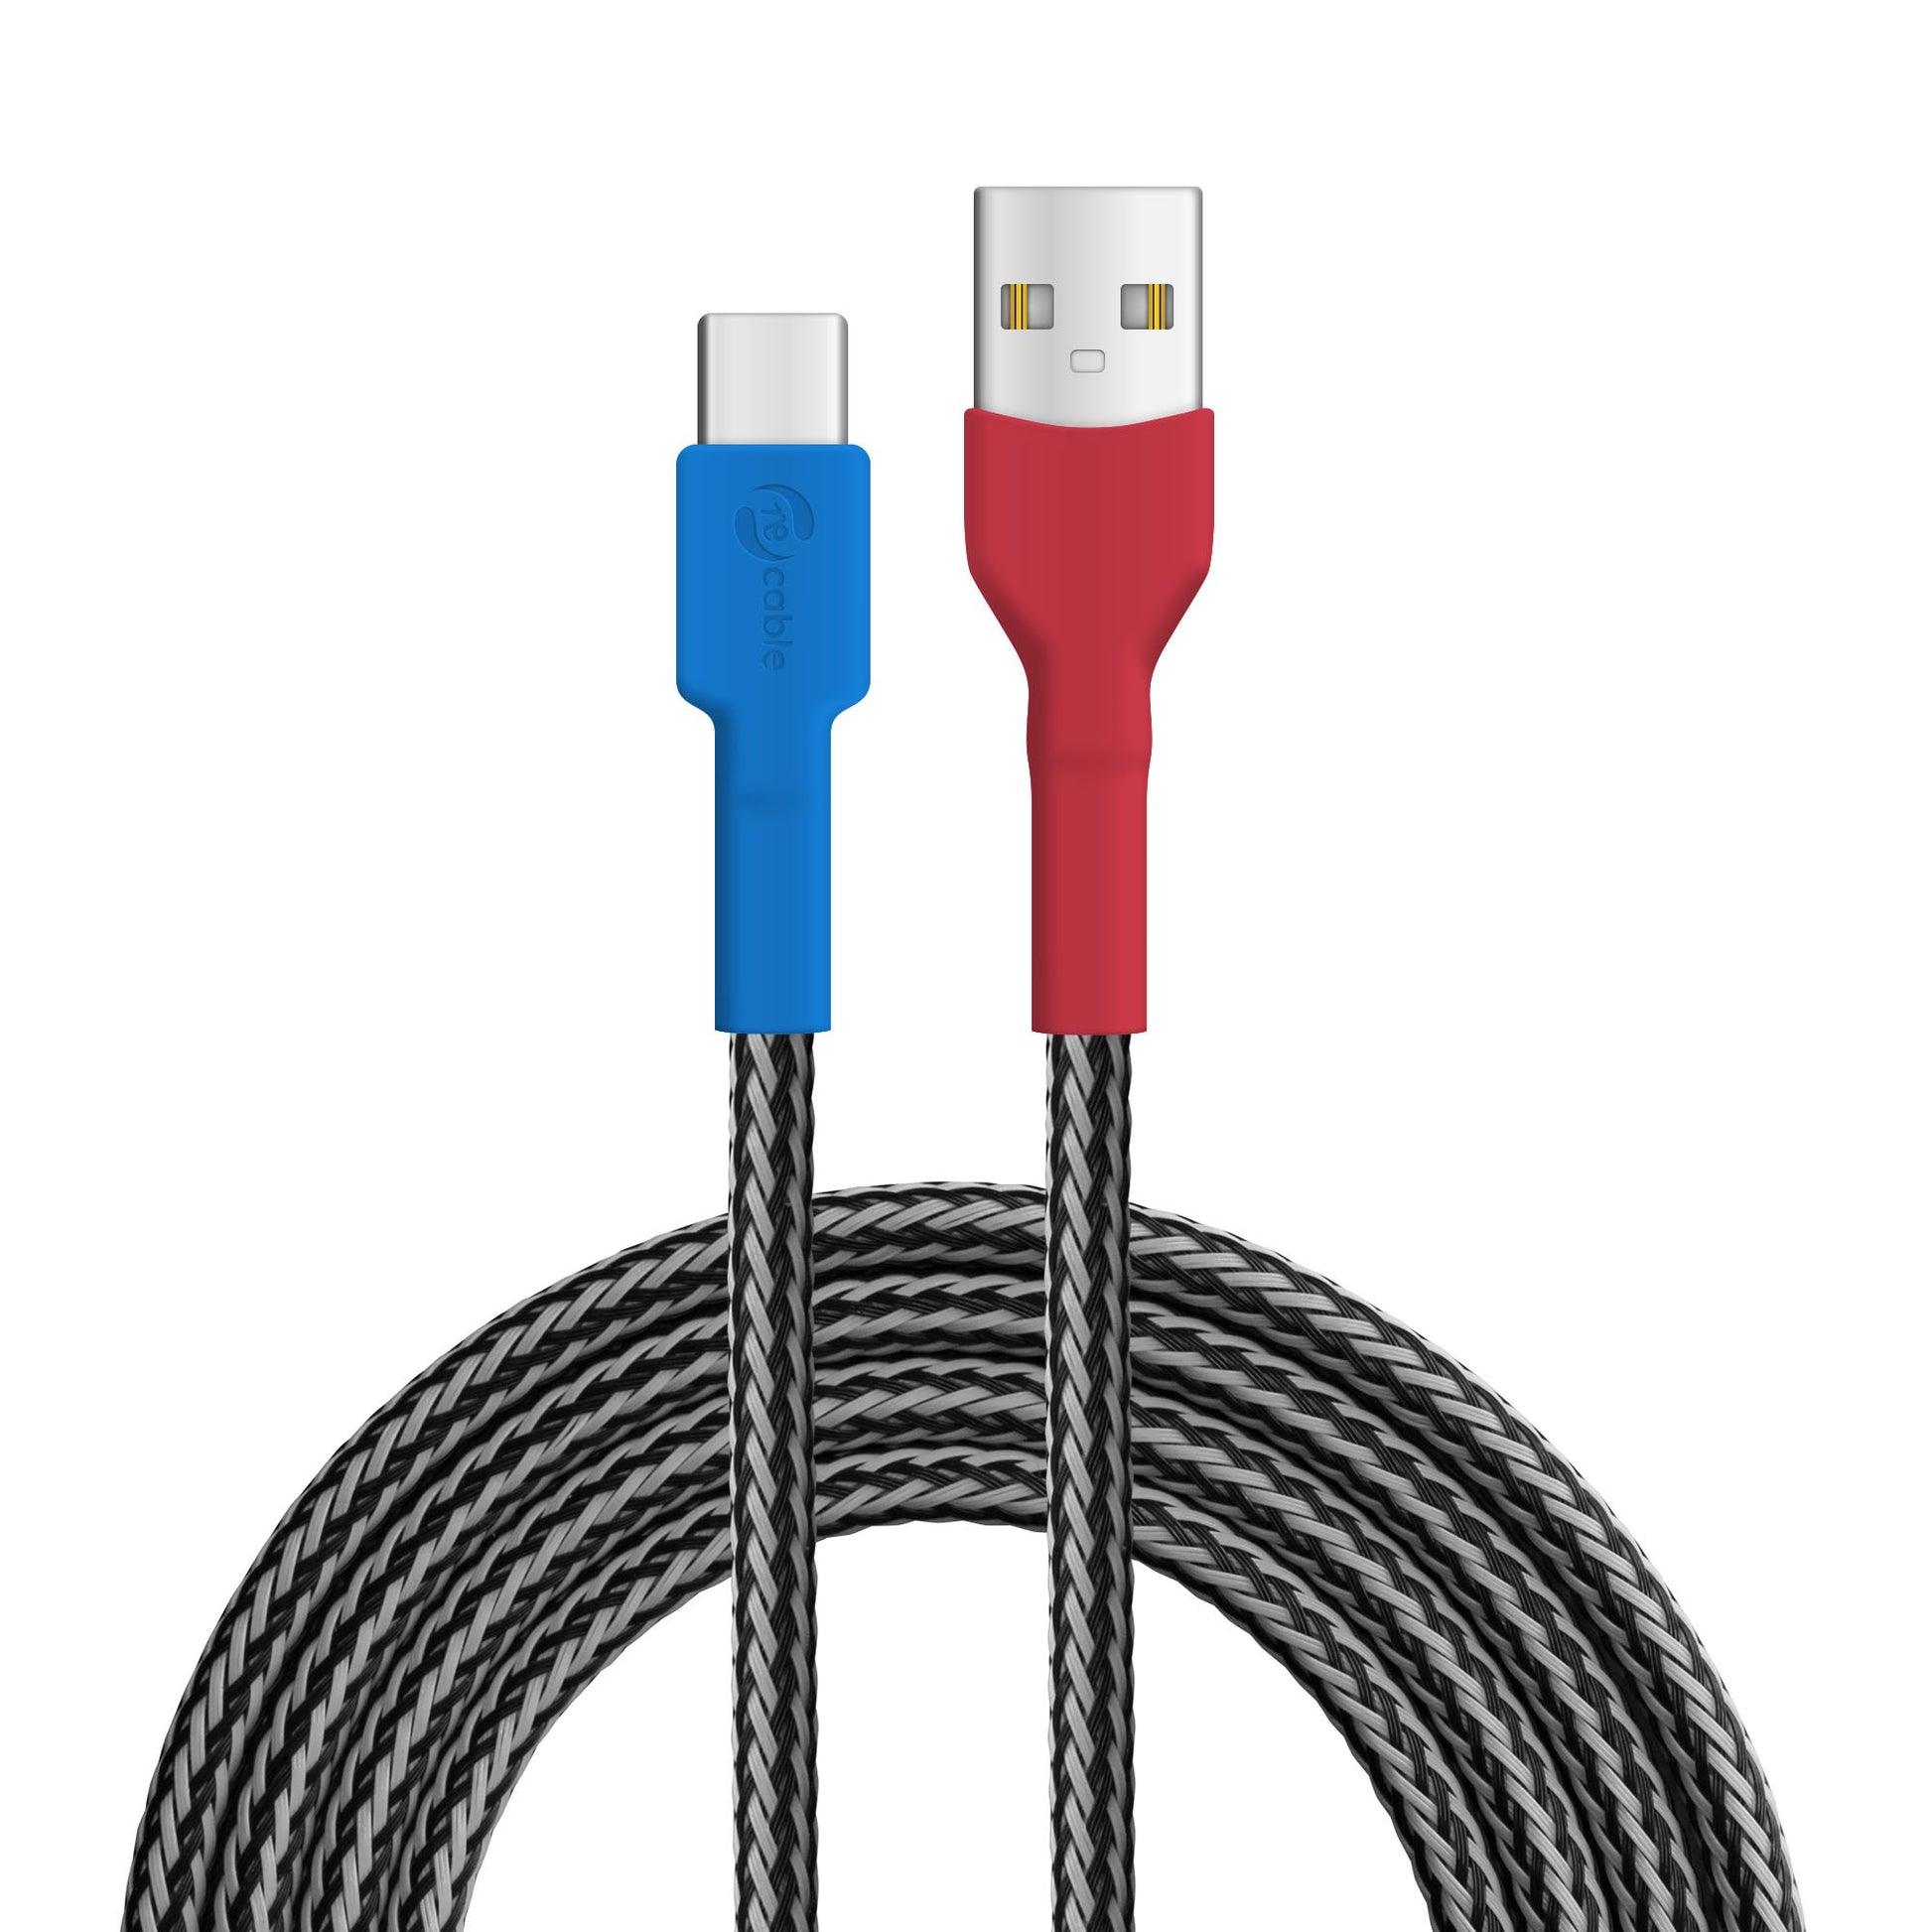 USB Kabel, Design: Helmkasuar, Anschluss: USB A auf USB C